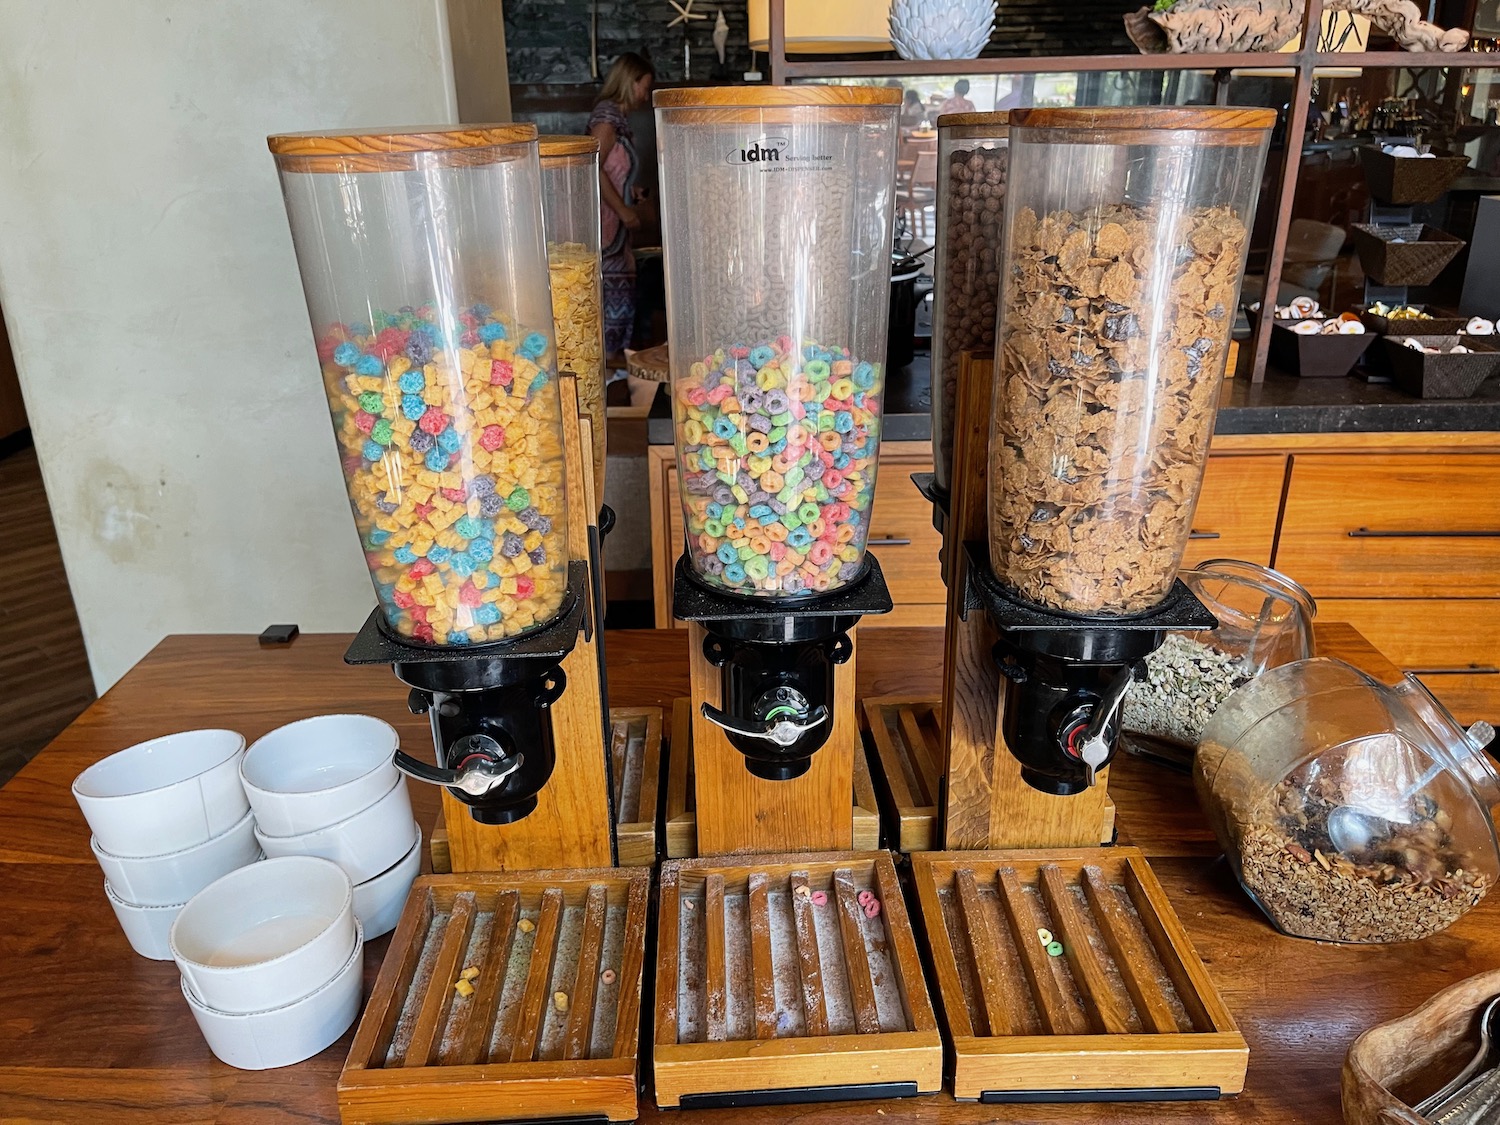 cereal in a dispenser